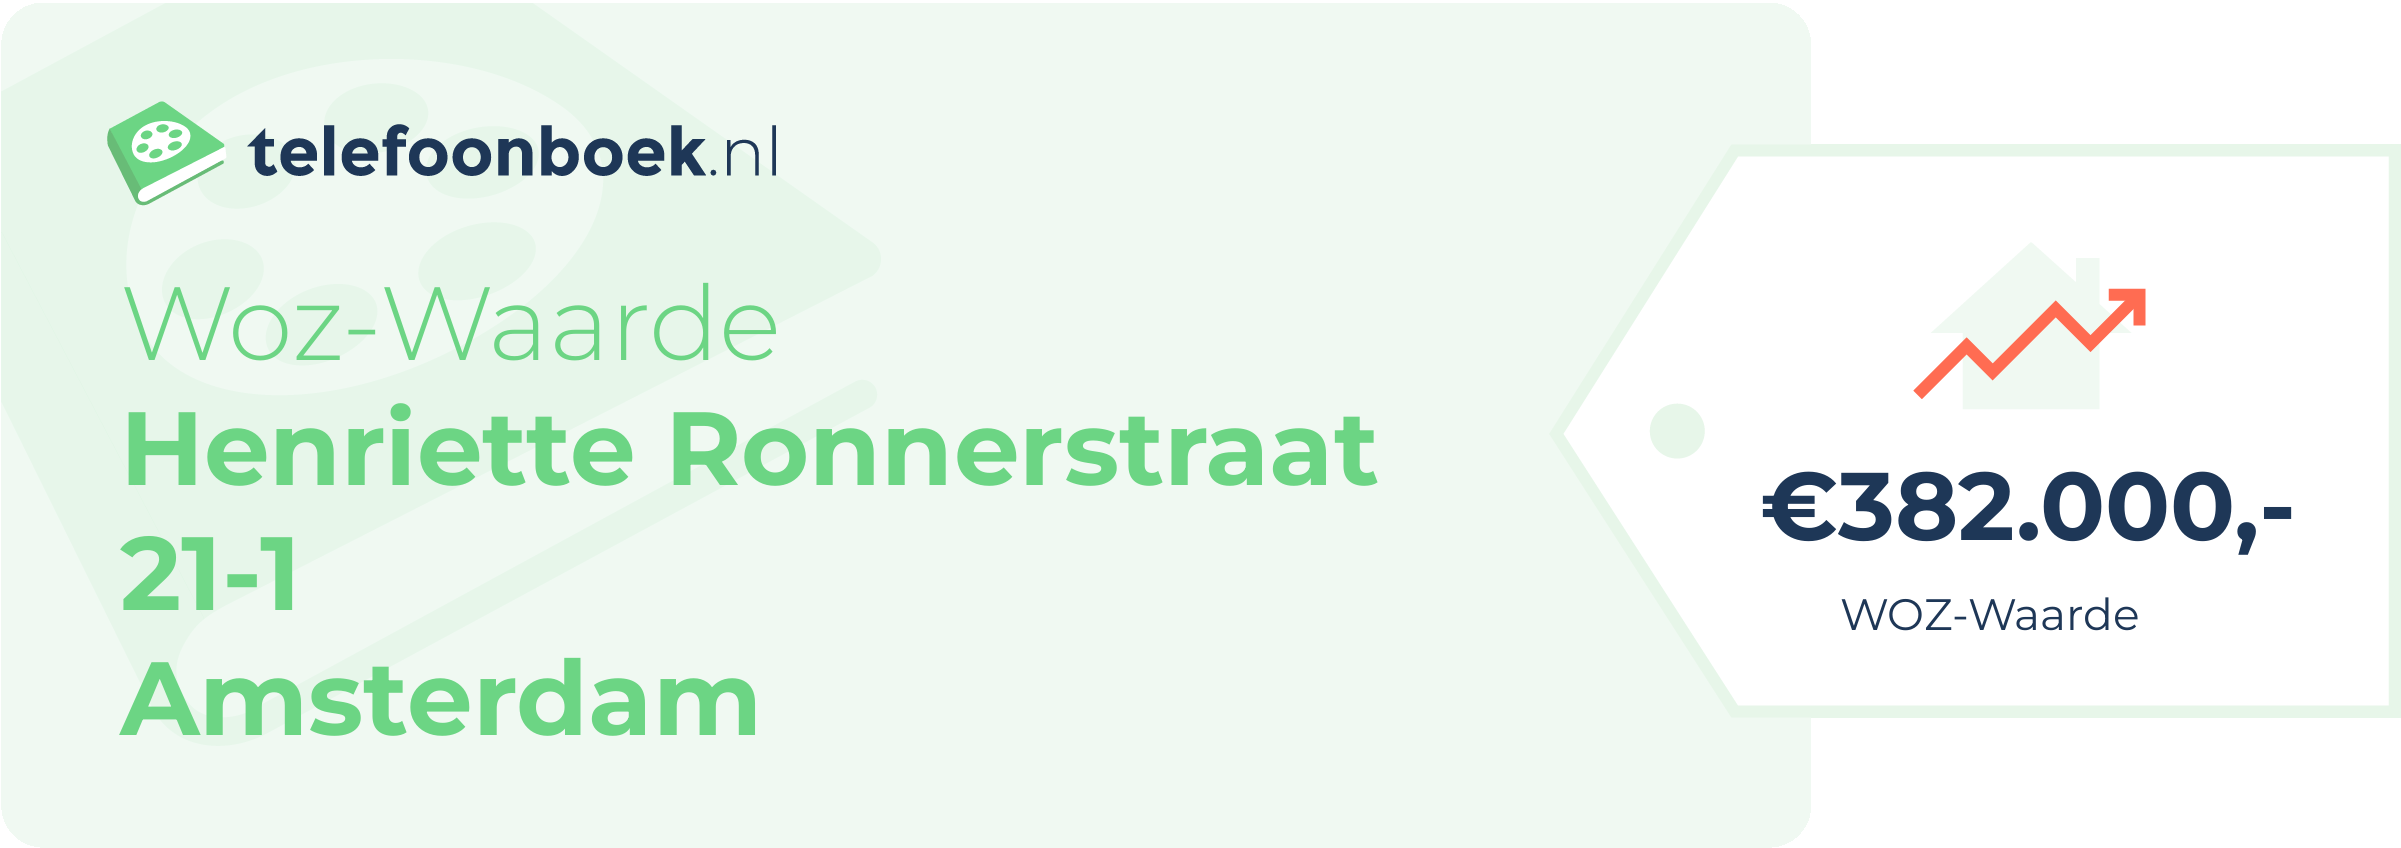 WOZ-waarde Henriette Ronnerstraat 21-1 Amsterdam